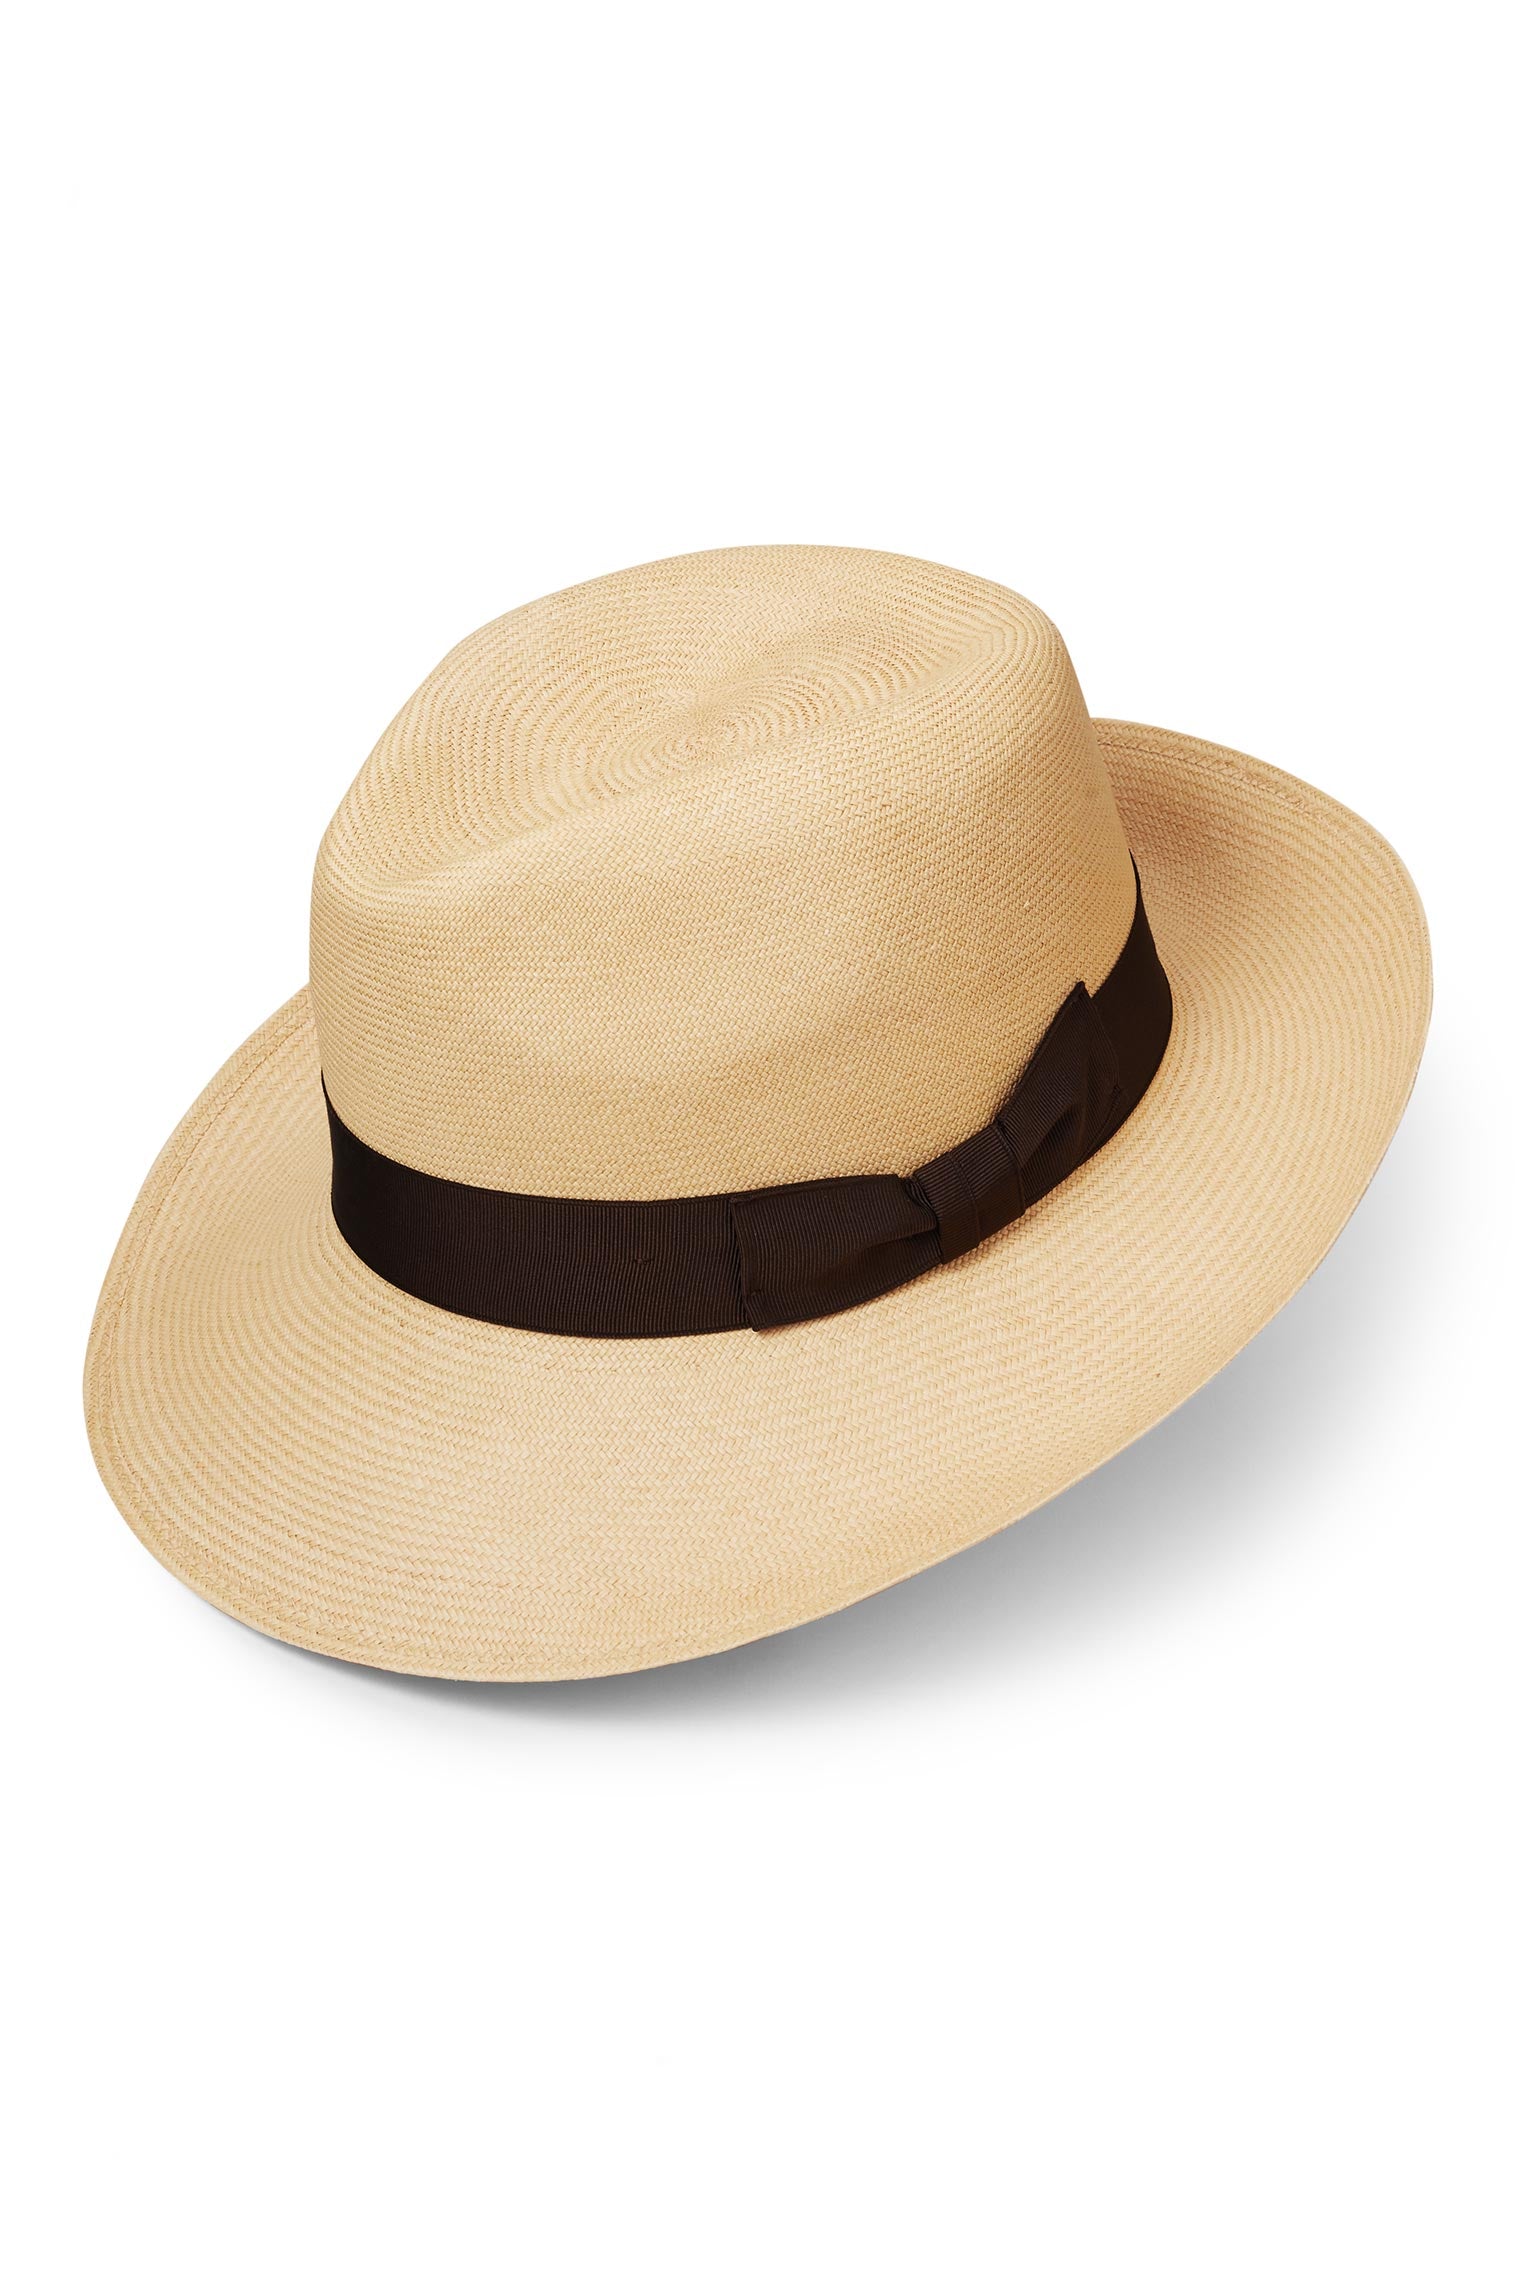 Ventnor Cuenca Ultra-fino Panama - Henley Royal Regatta Hats - Lock & Co. Hatters London UK